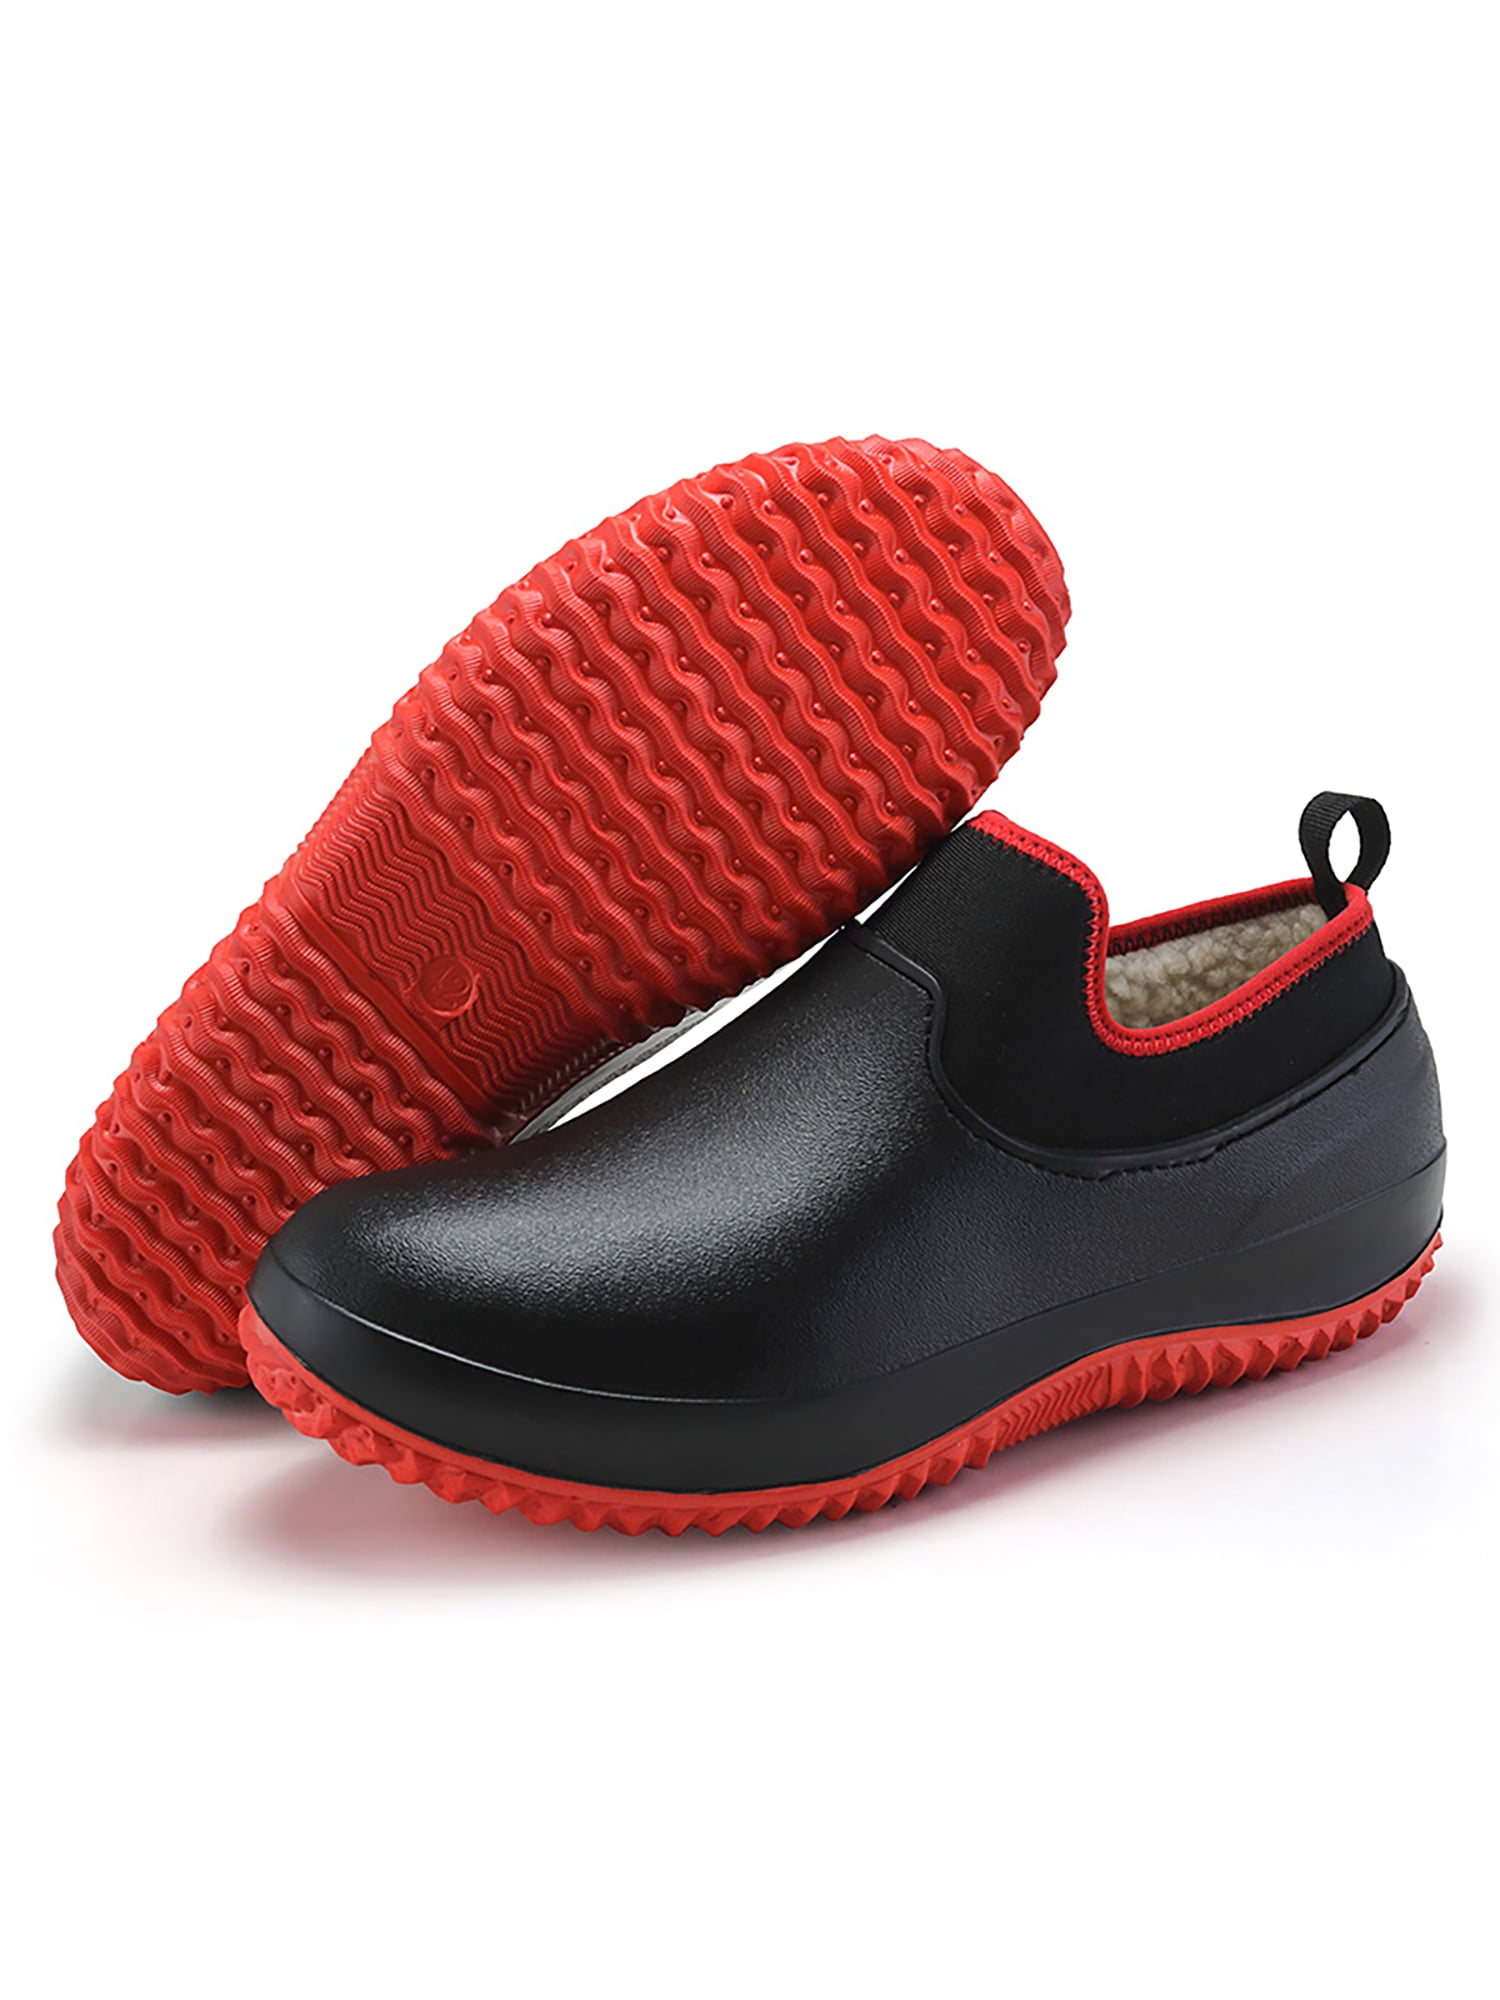 Women's Work Shoes - Non Slip Slip On Shoes - Slip On Work Shoes - 4